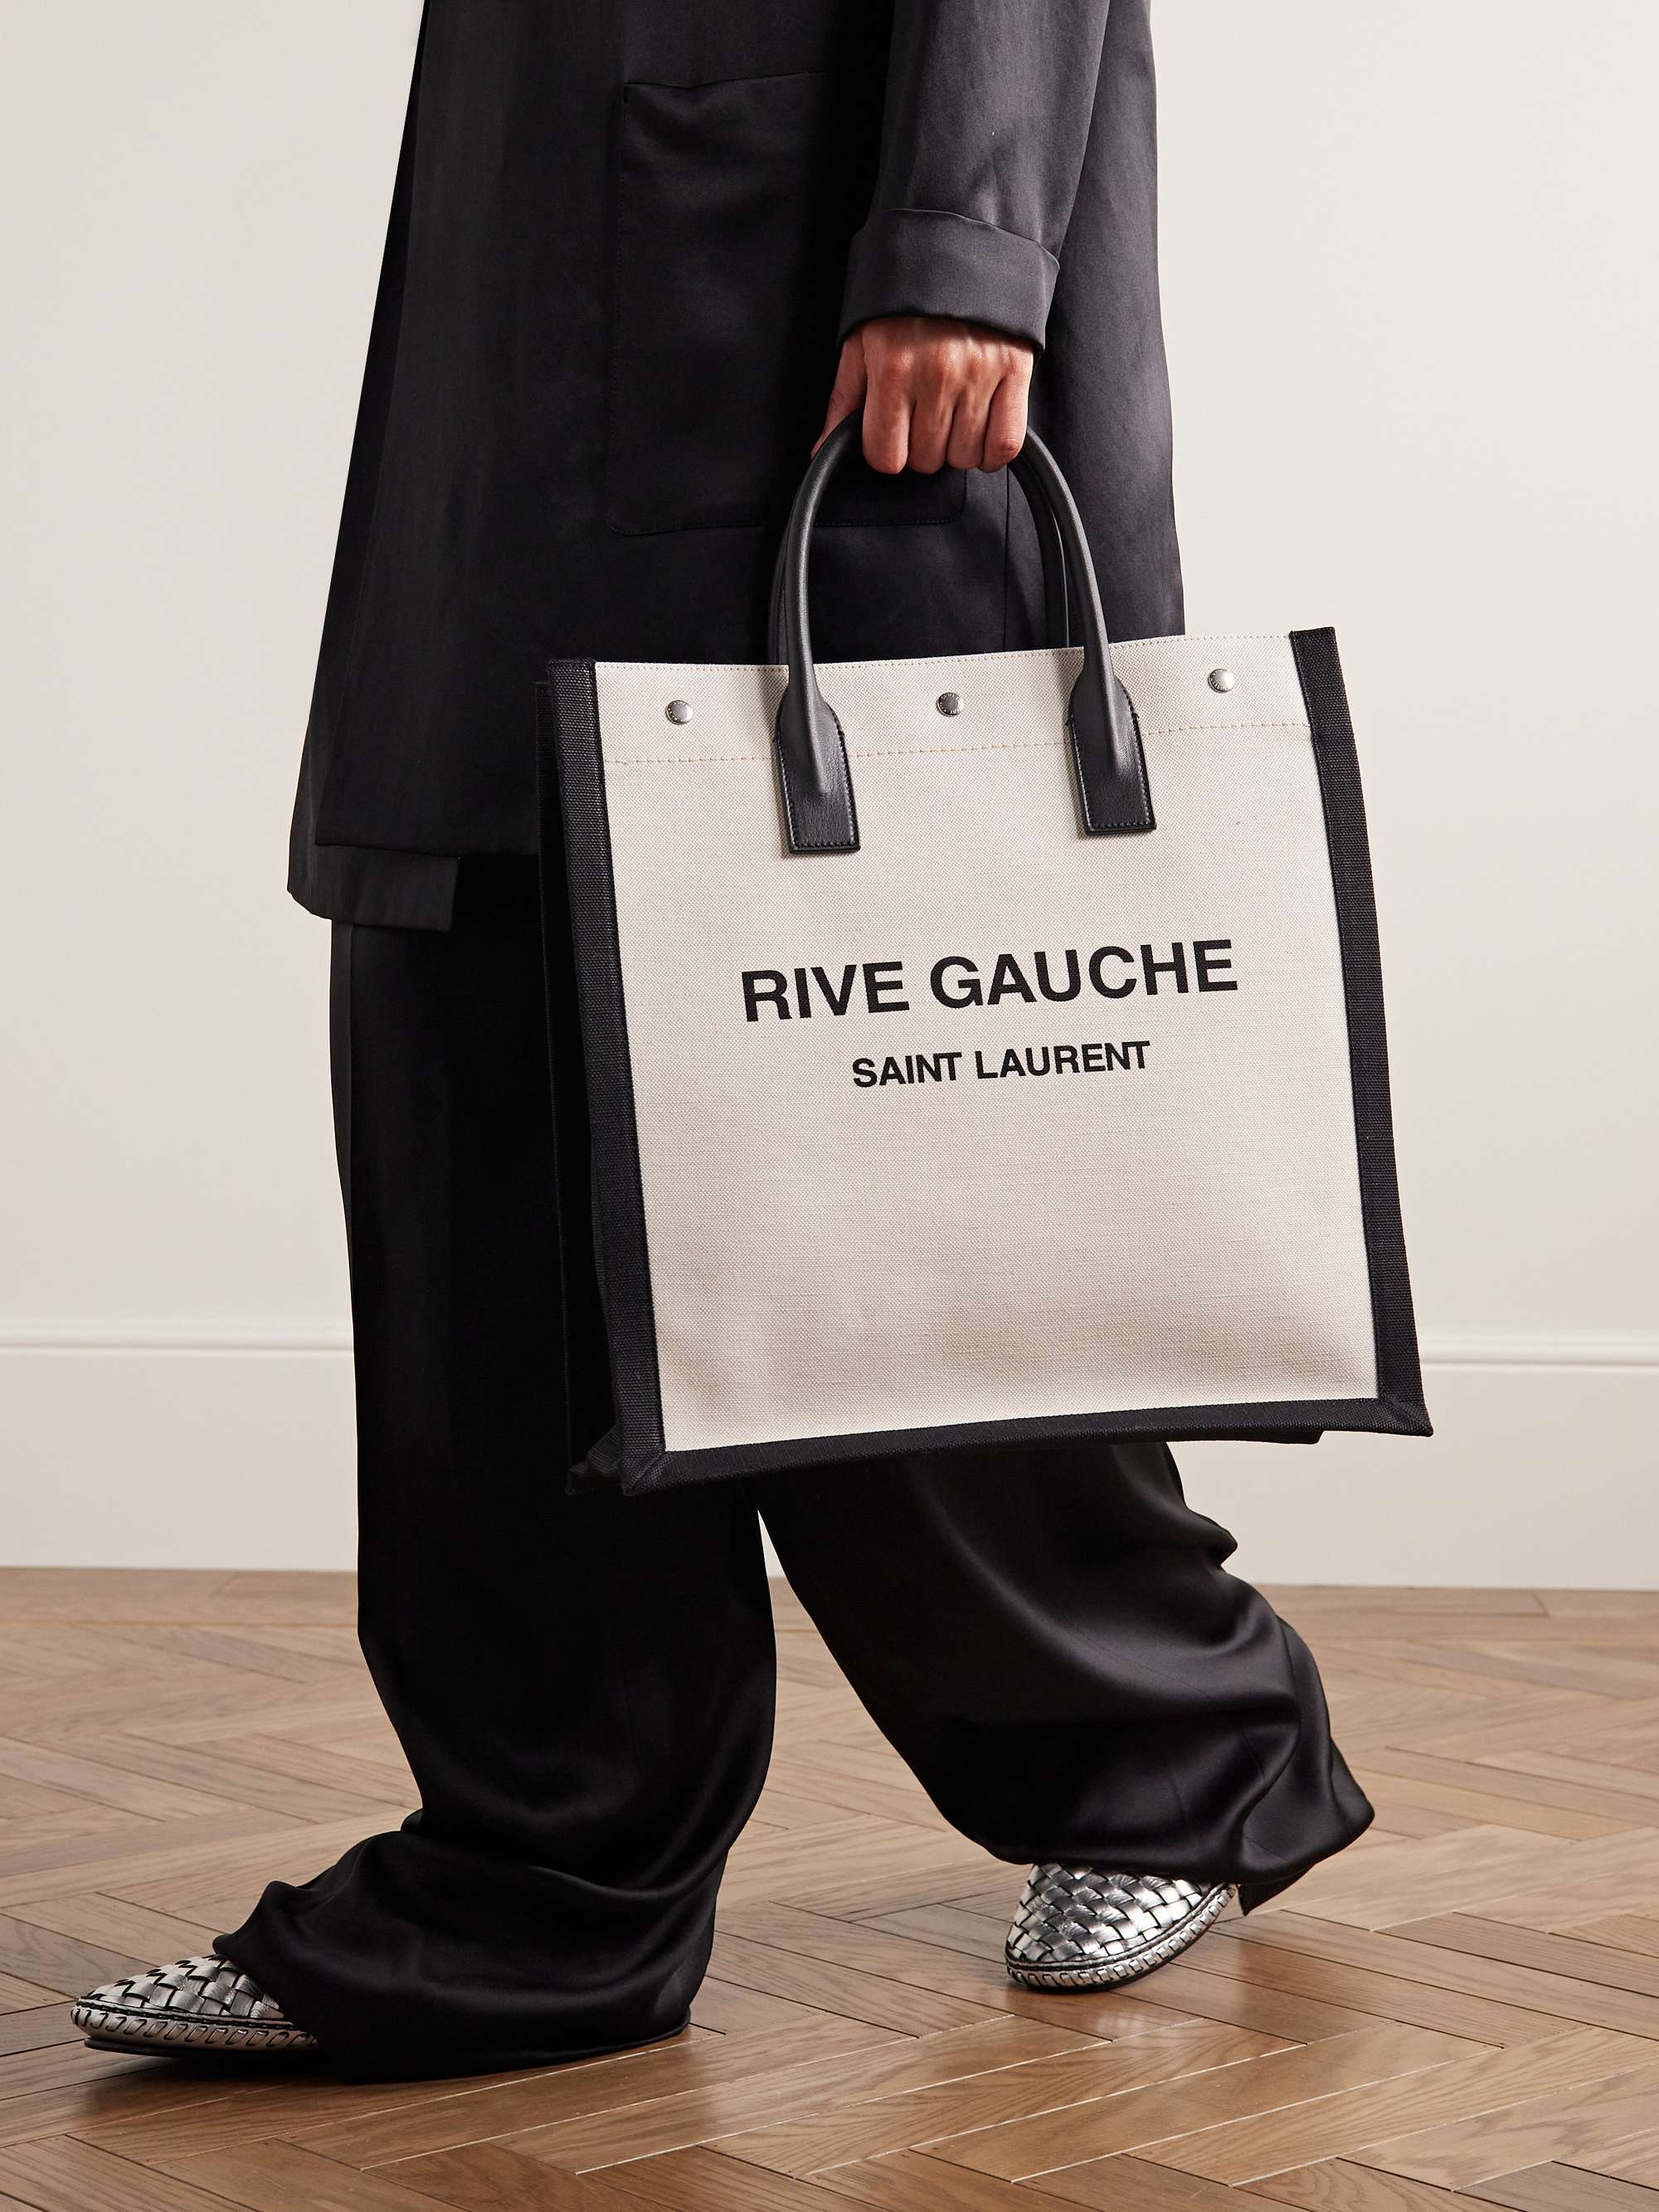 SAINT LAURENT Rive Gauche leather-trimmed printed canvas tote